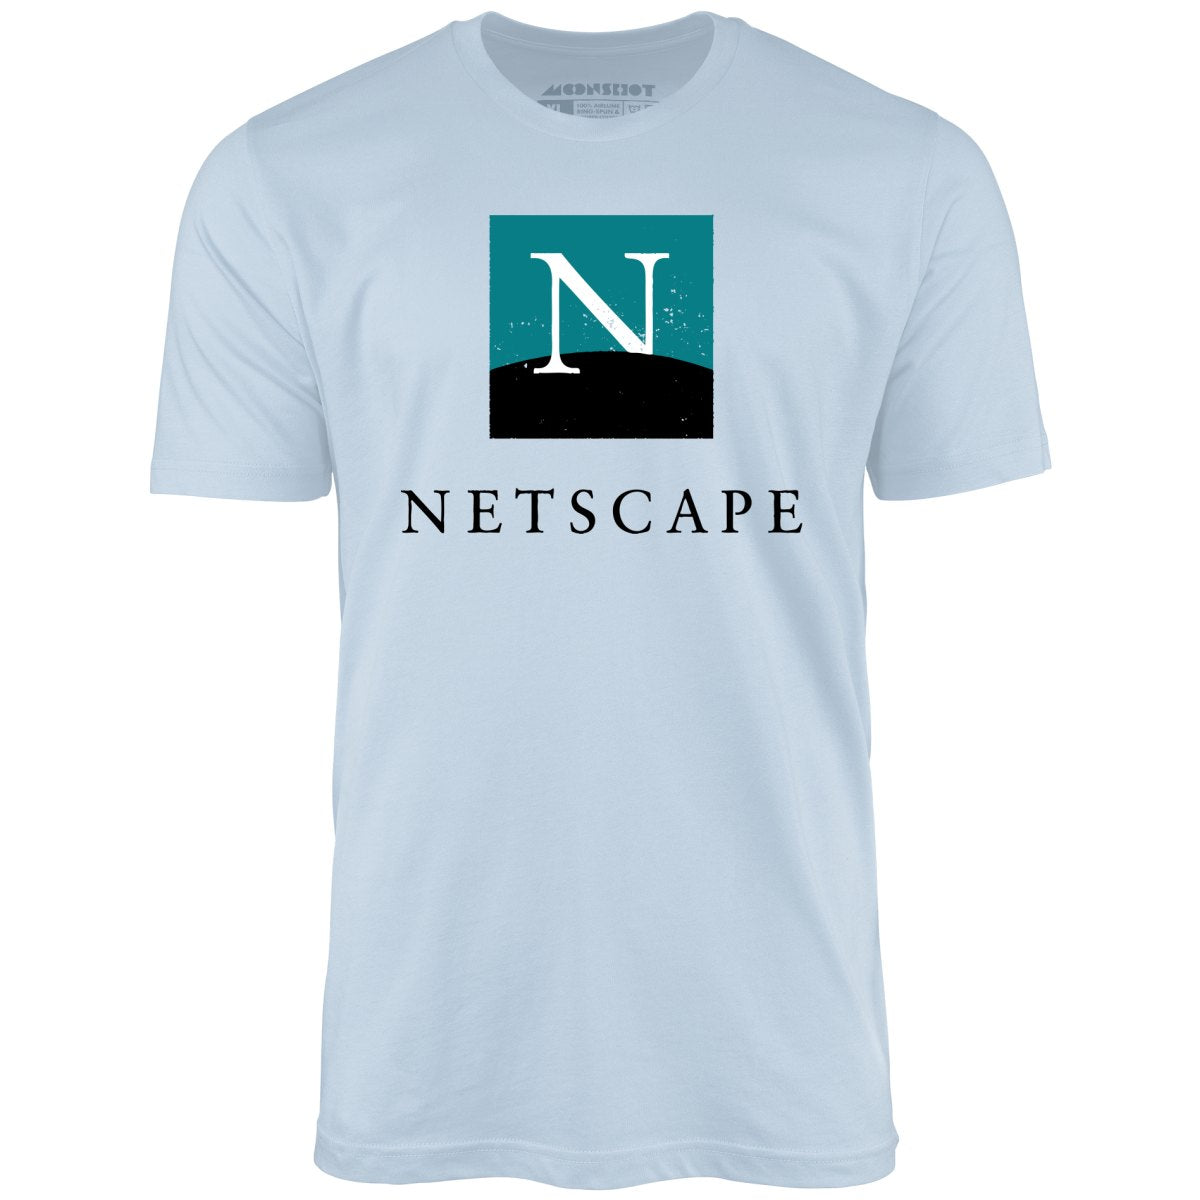 Netscape - Vintage Internet - Unisex T-Shirt